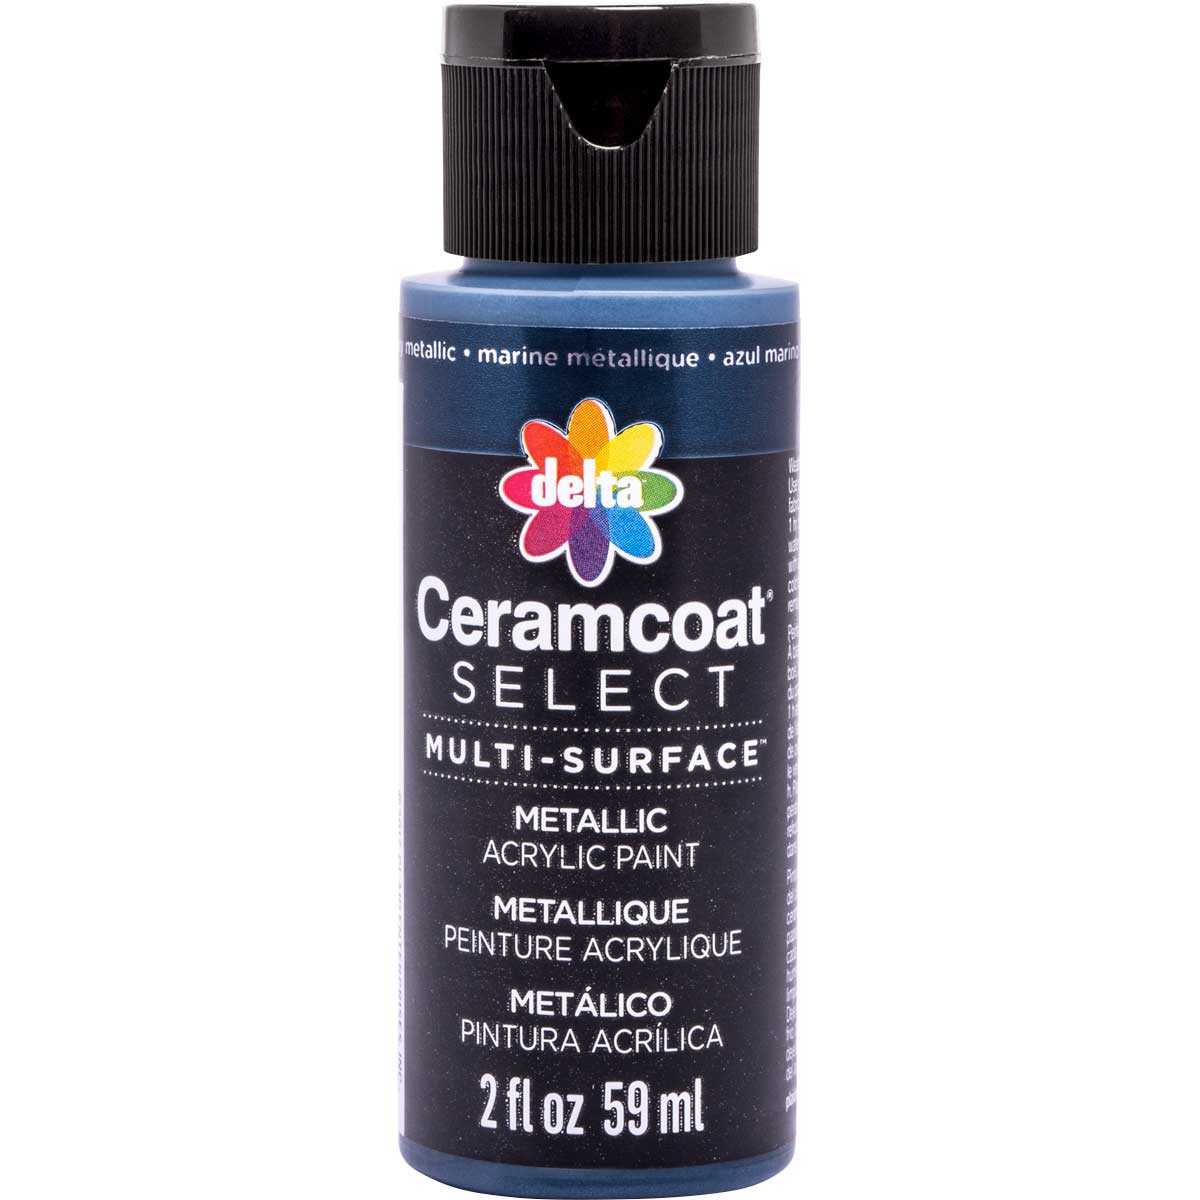 Delta Ceramcoat ® Select Multi-Surface Acrylic Paint - Metallic - Navy, 2 oz. - 04105